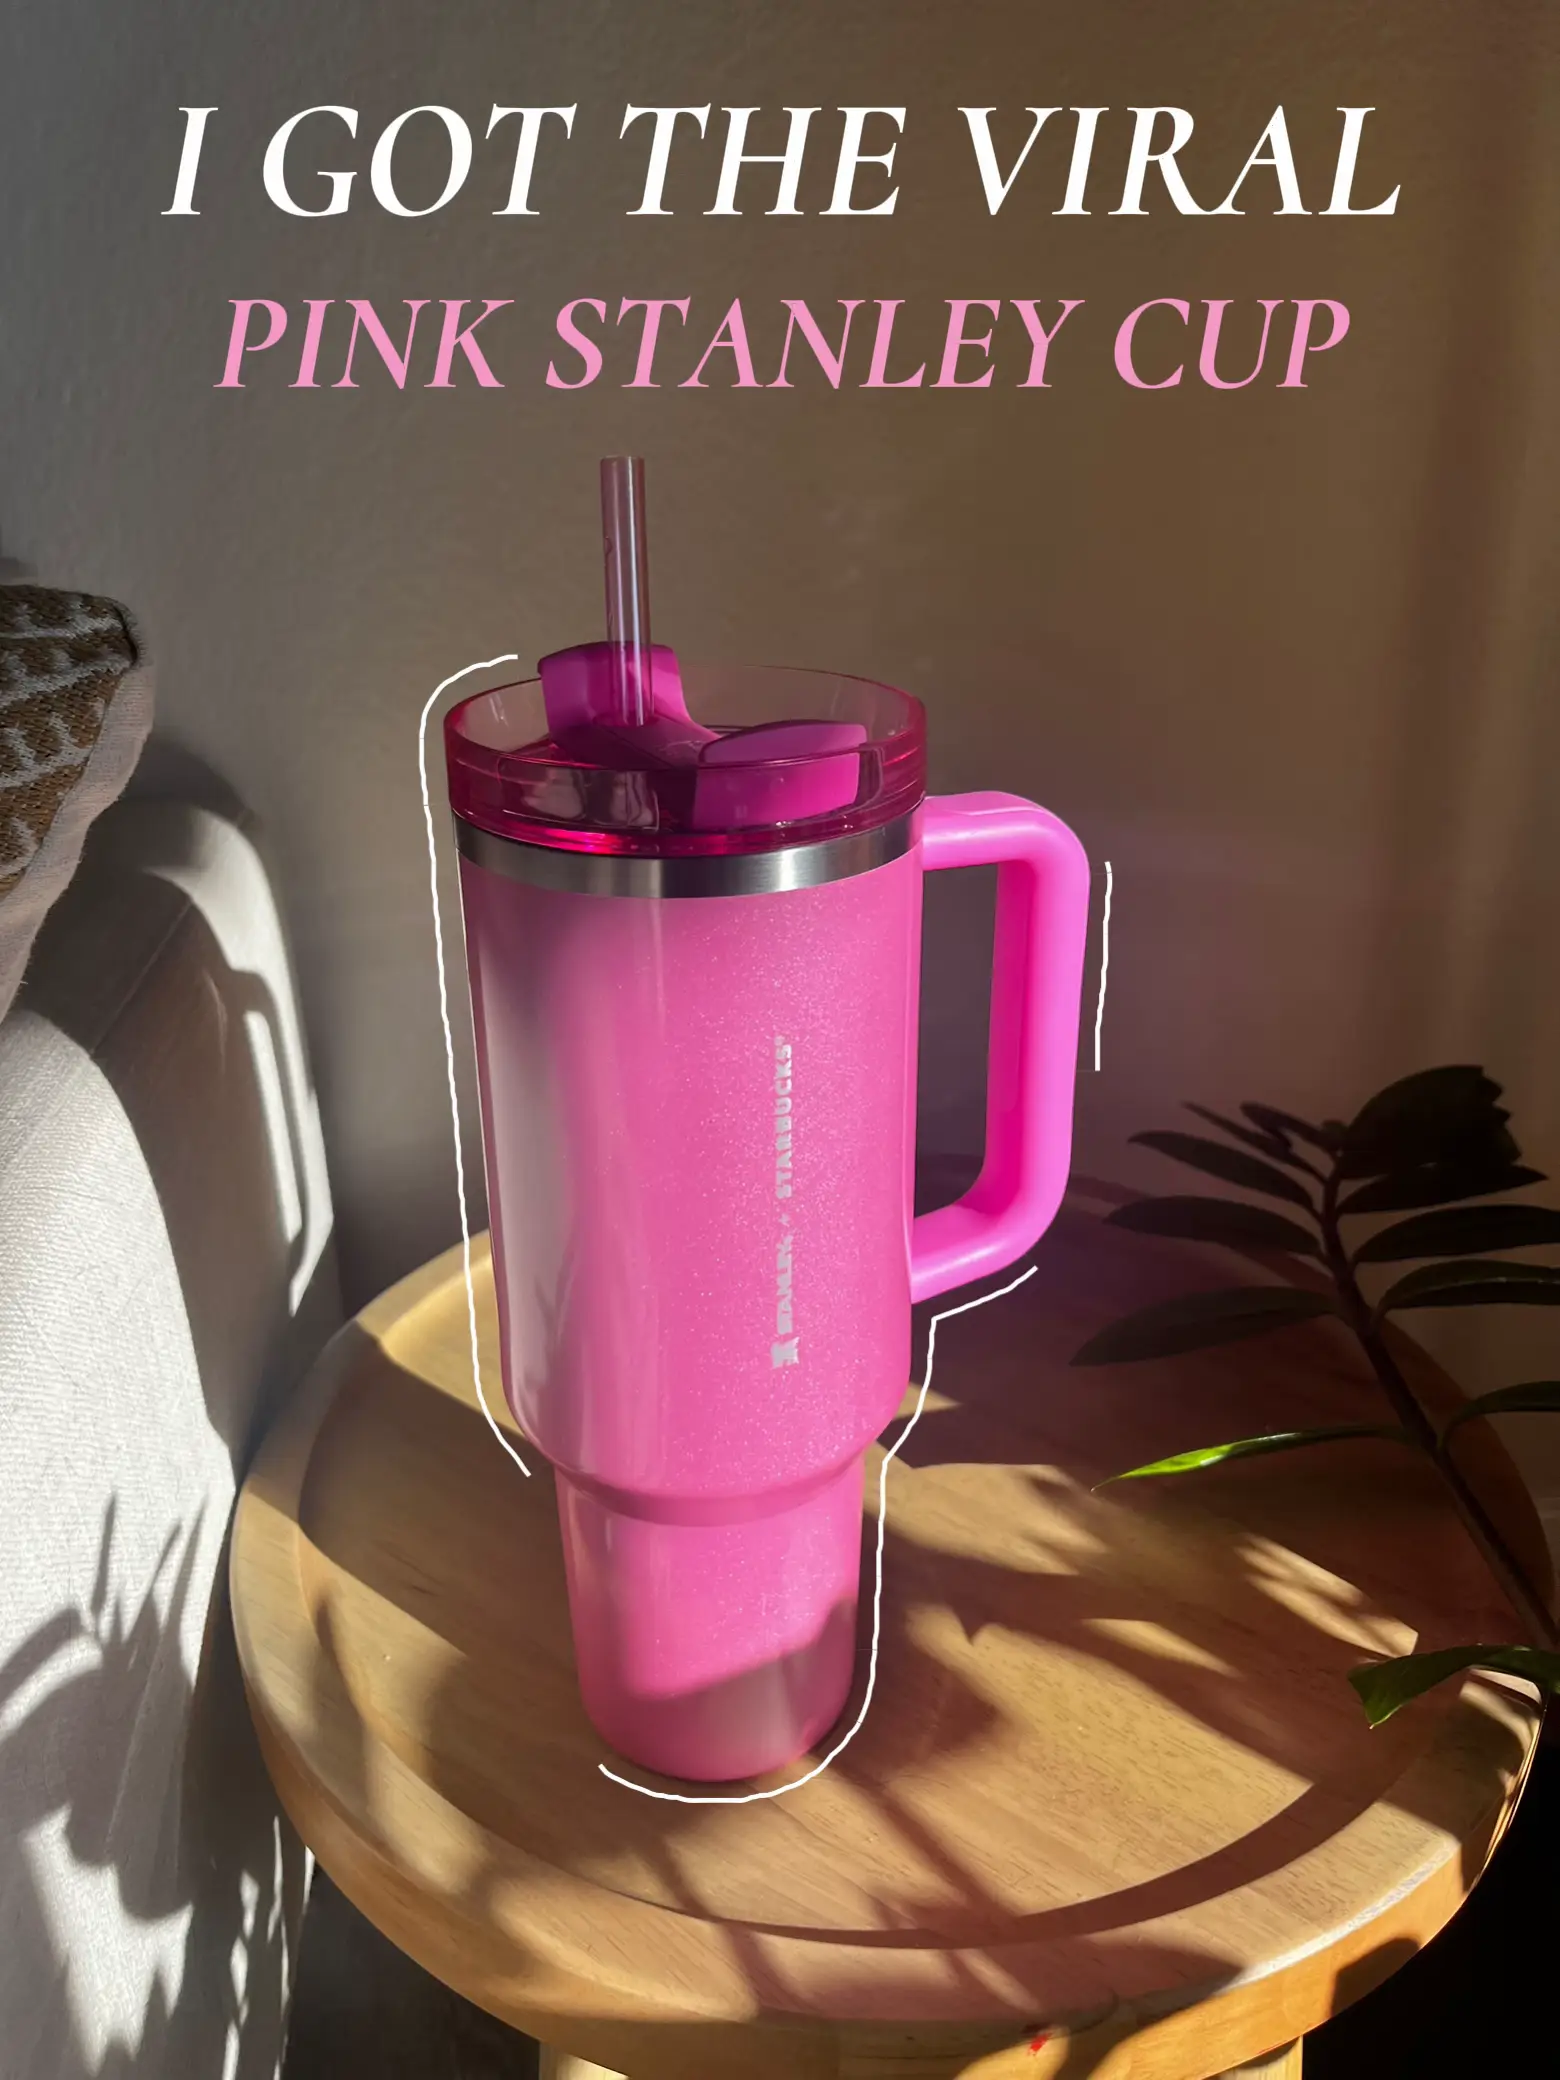 Pink Stanley cup #fyp #foryou